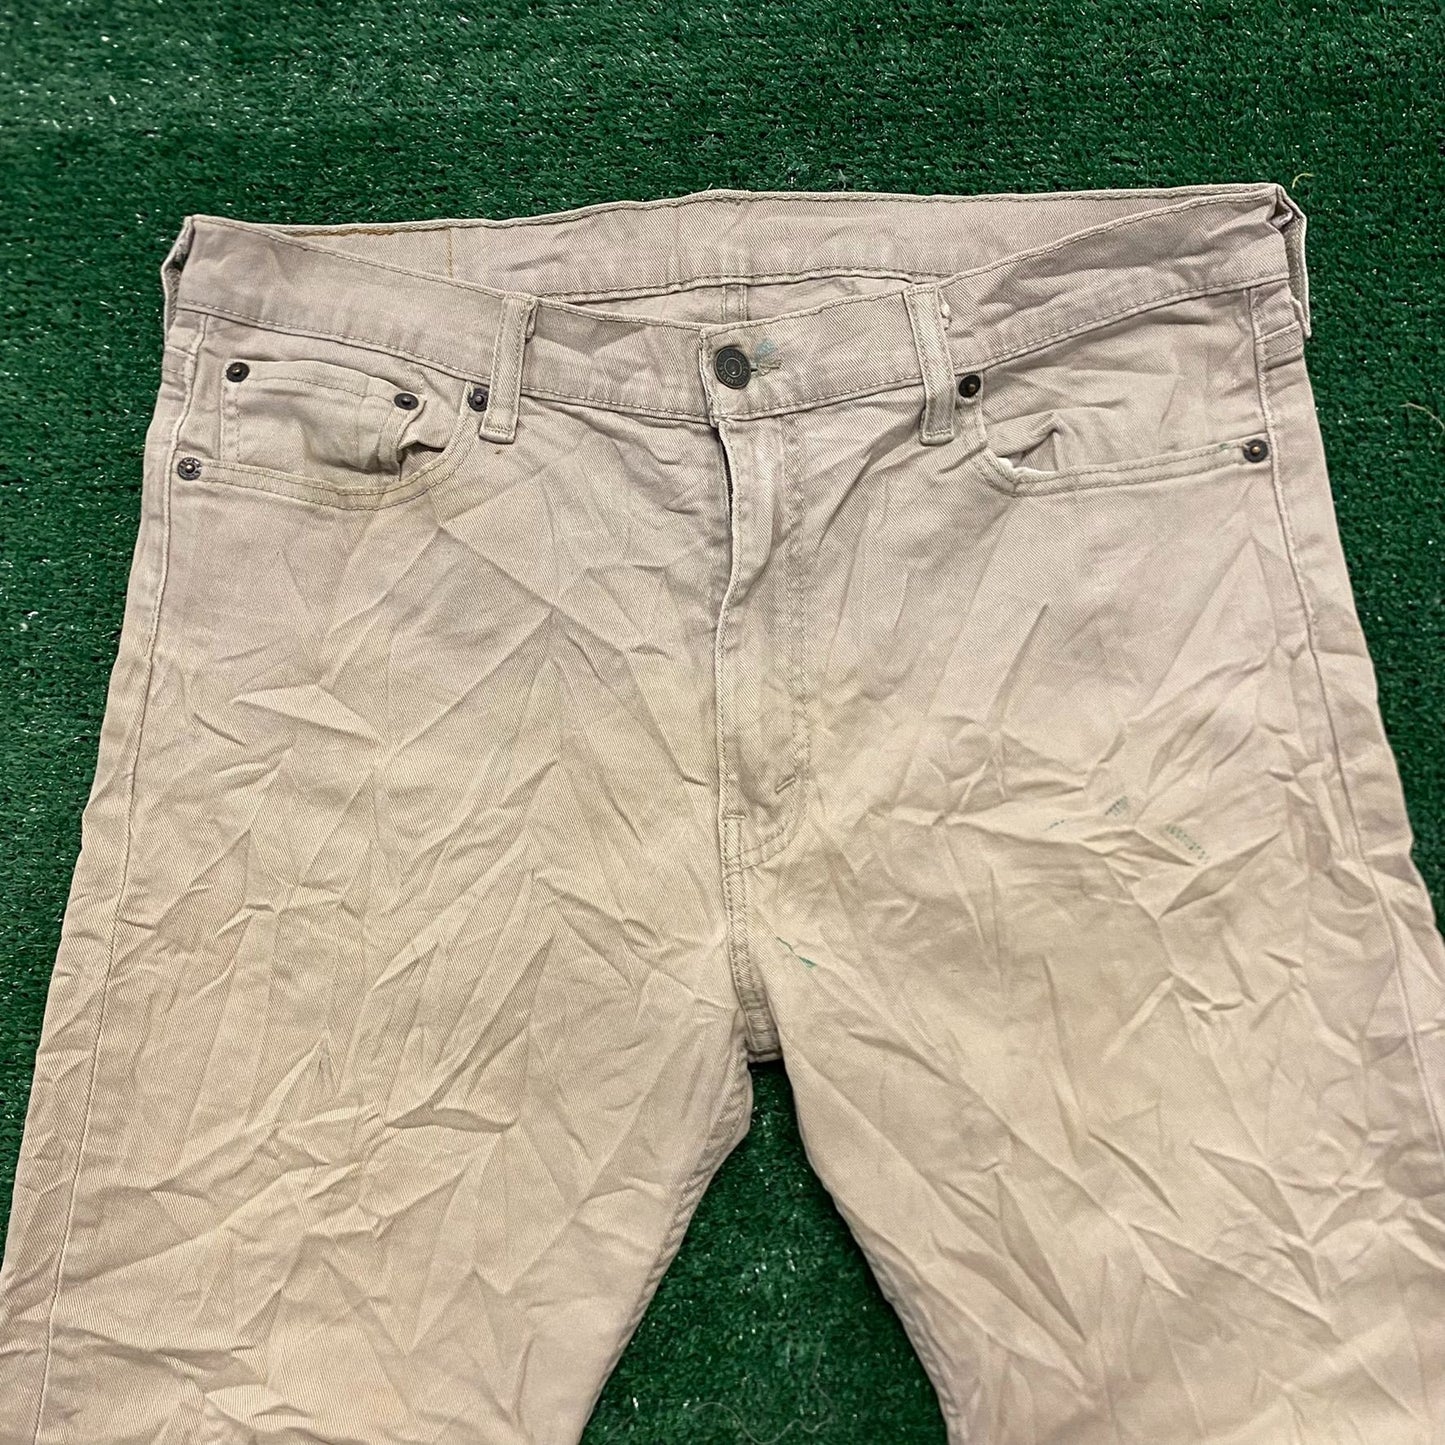 Levi's 512 Slim Taper Fit Vintage Khakis Chinos Pants